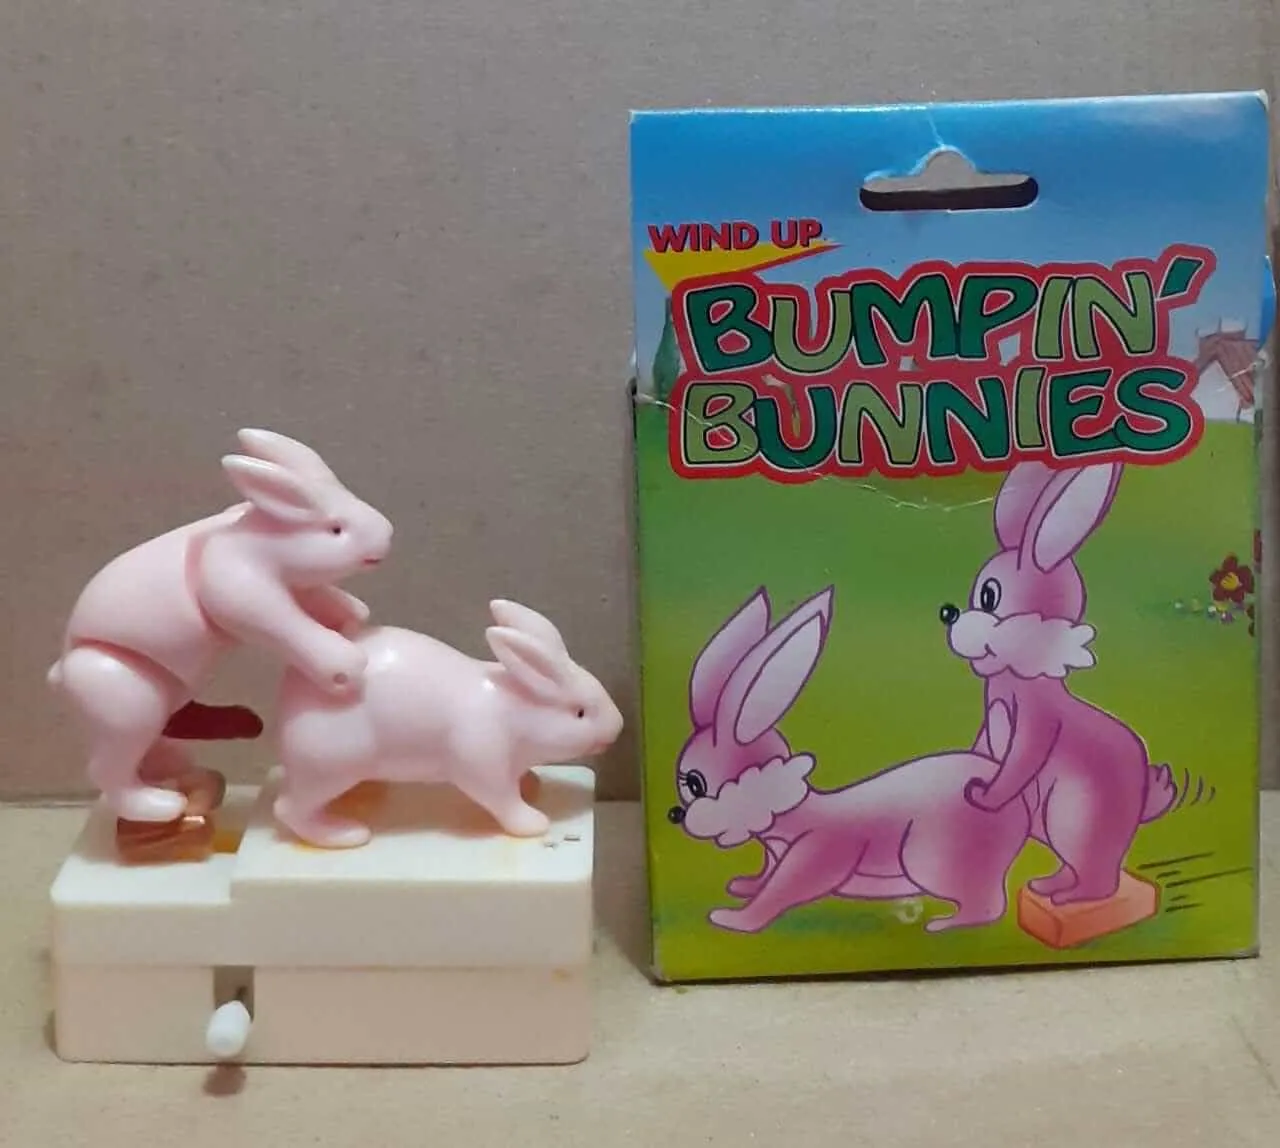 wind up pumpin' bunnies